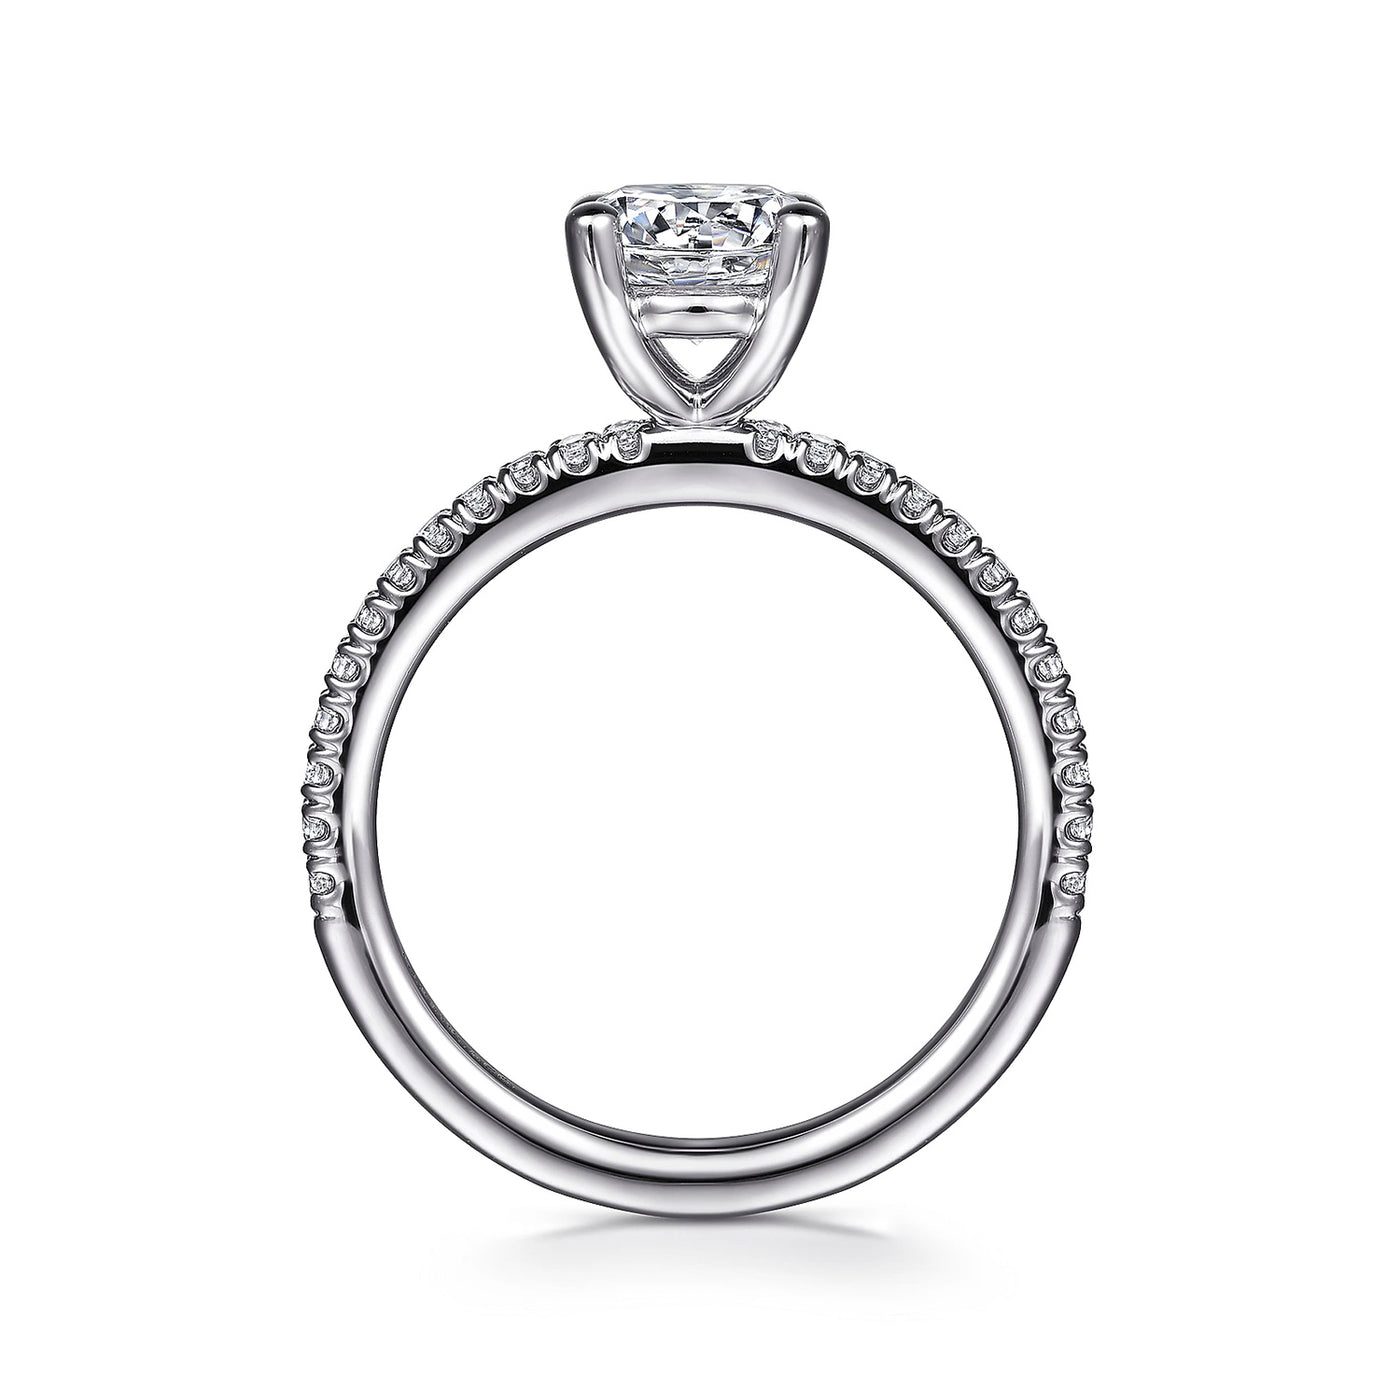 Gabriel & Co. 14k White Gold Solitaire Diamond Semi-Mount Engagement Ring – ER15525R4W44JJ.CSCZ